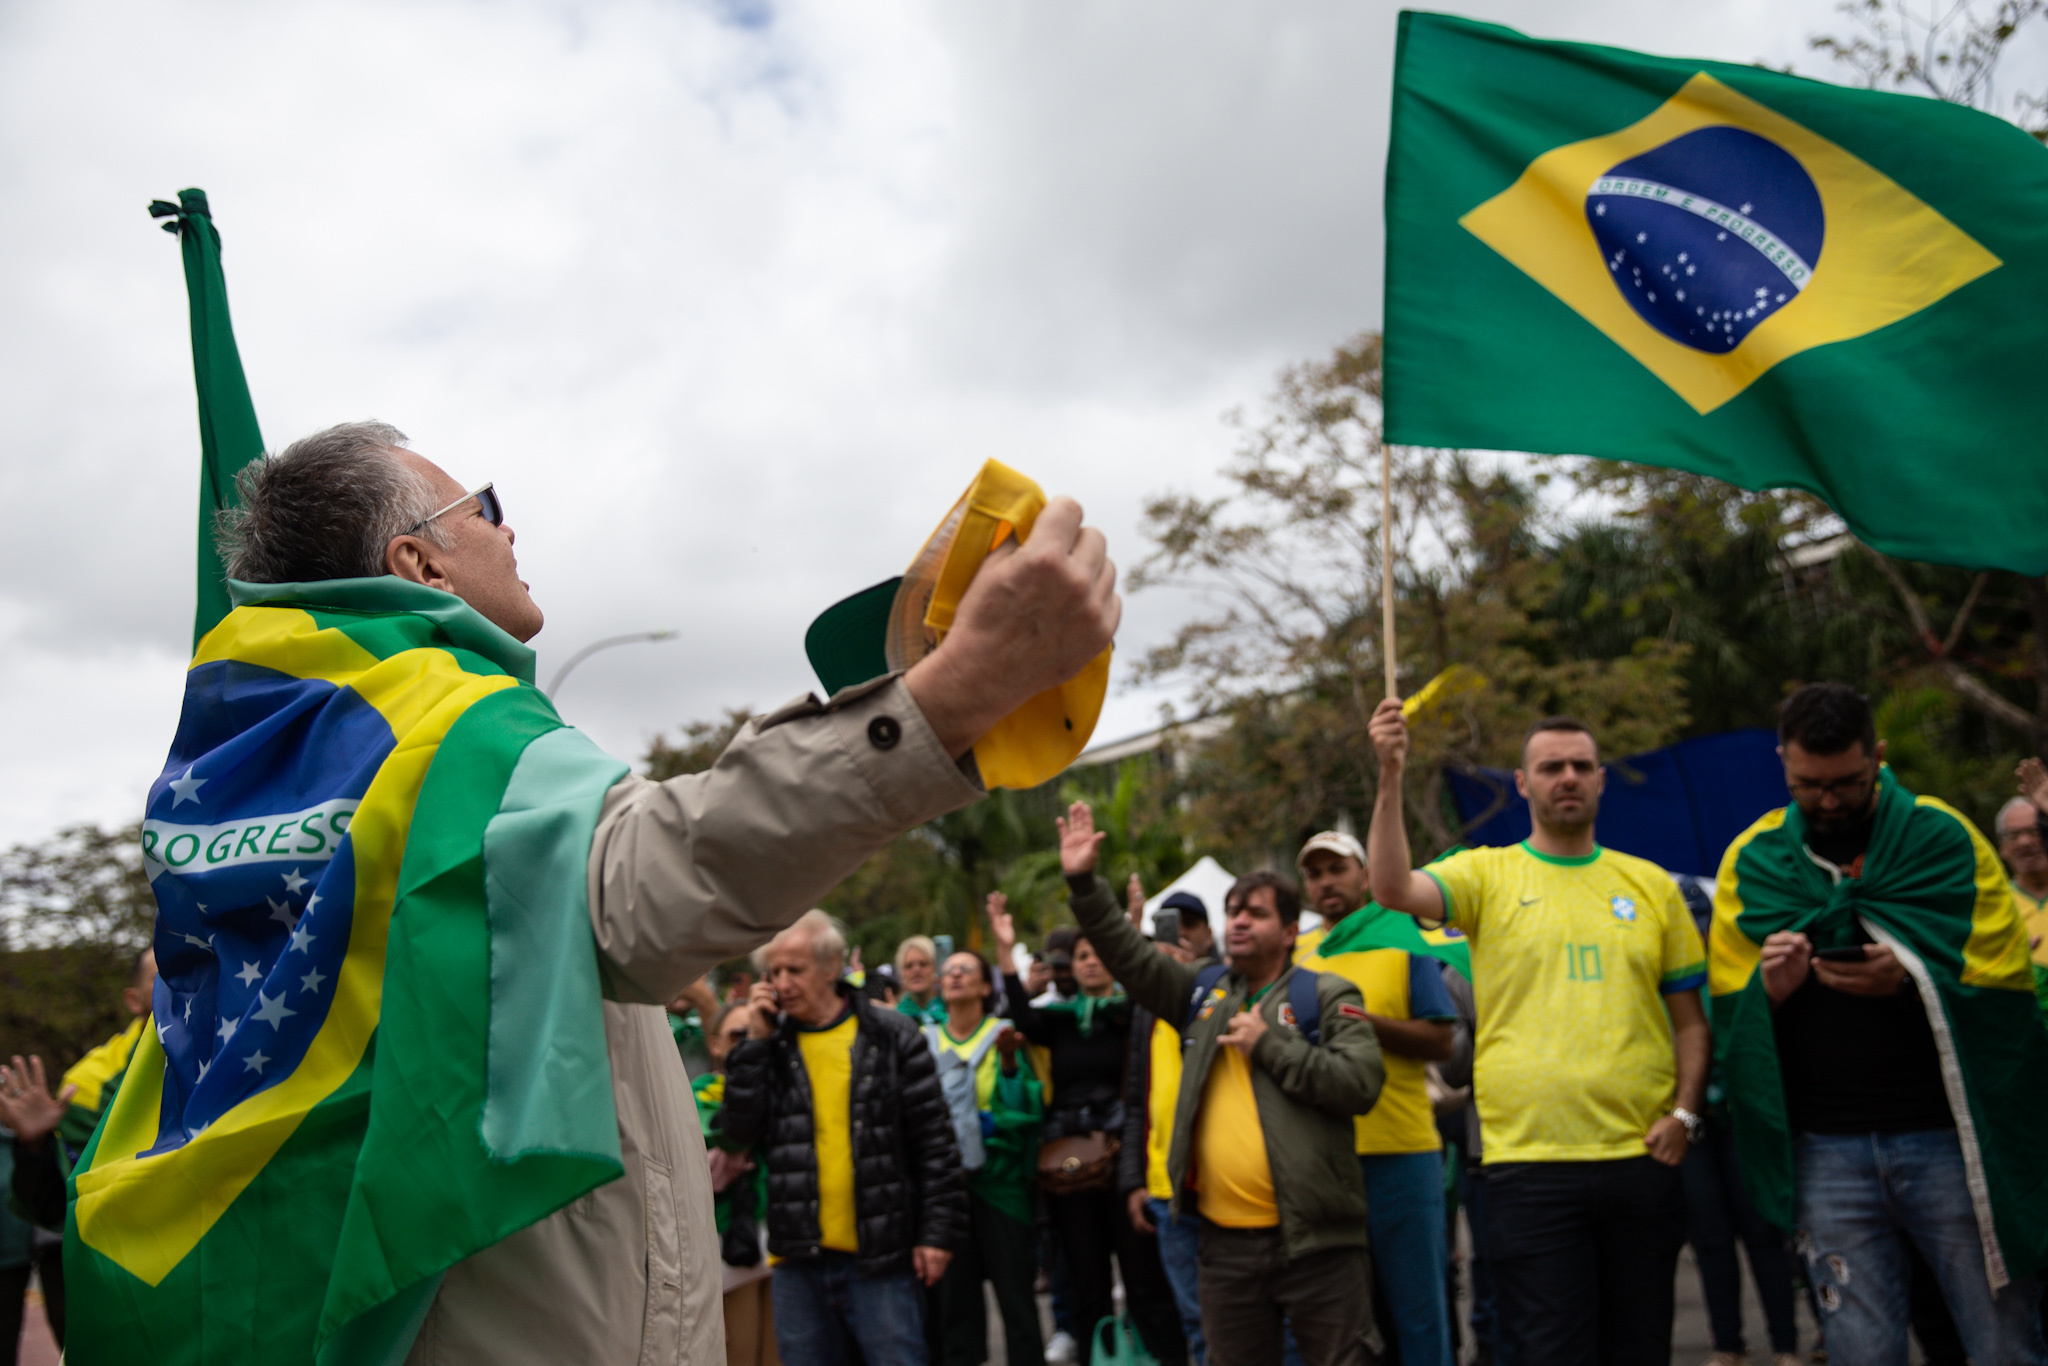 laura bolsonaro Archives - The Rio Times